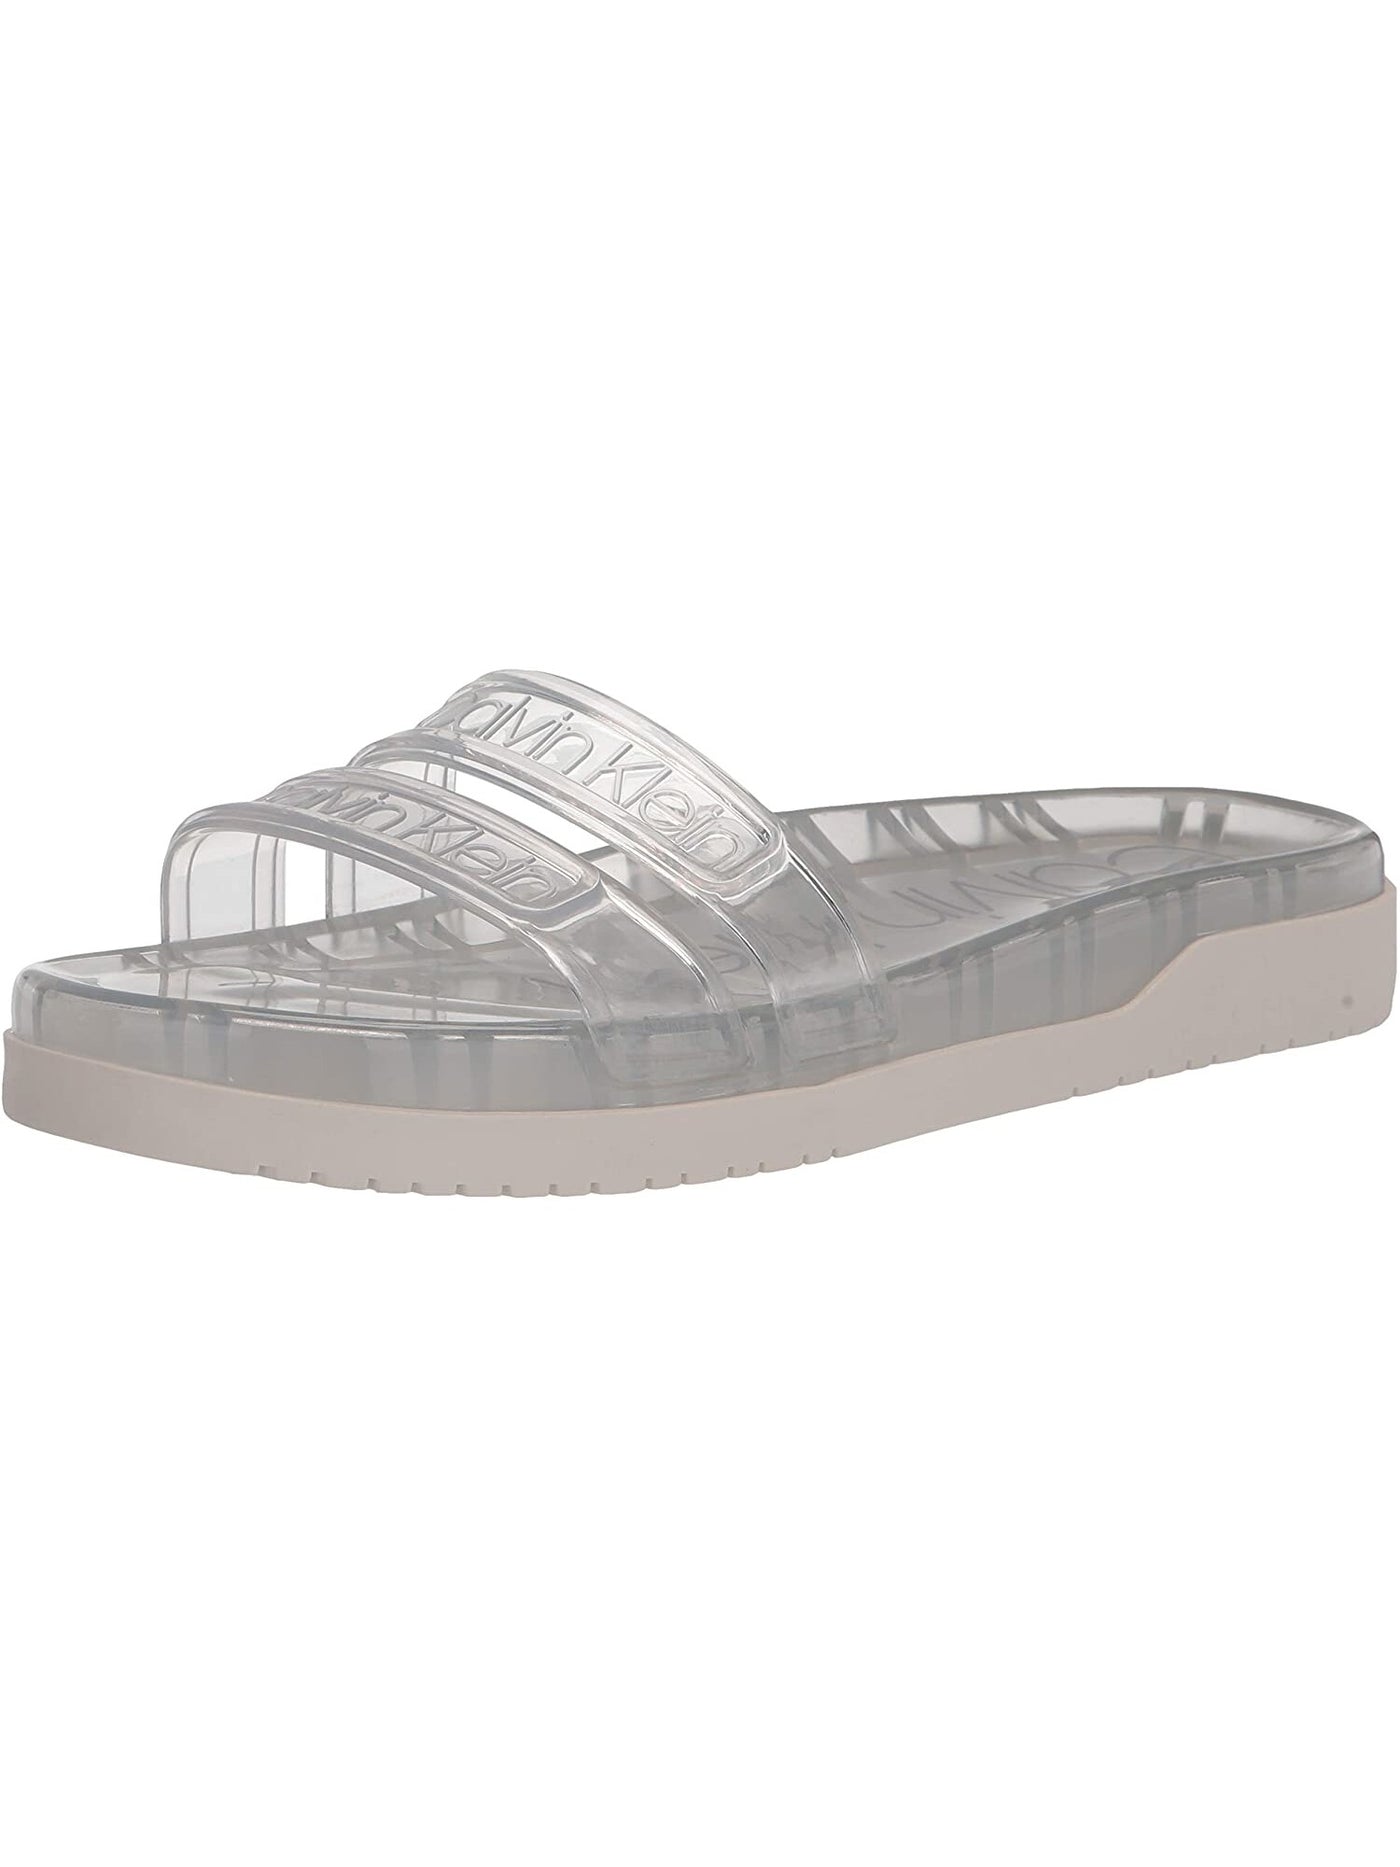 CALVIN KLEIN Womens White Logo Strappy Tobi Round Toe Platform Slip On Slide Sandals Shoes 5 M